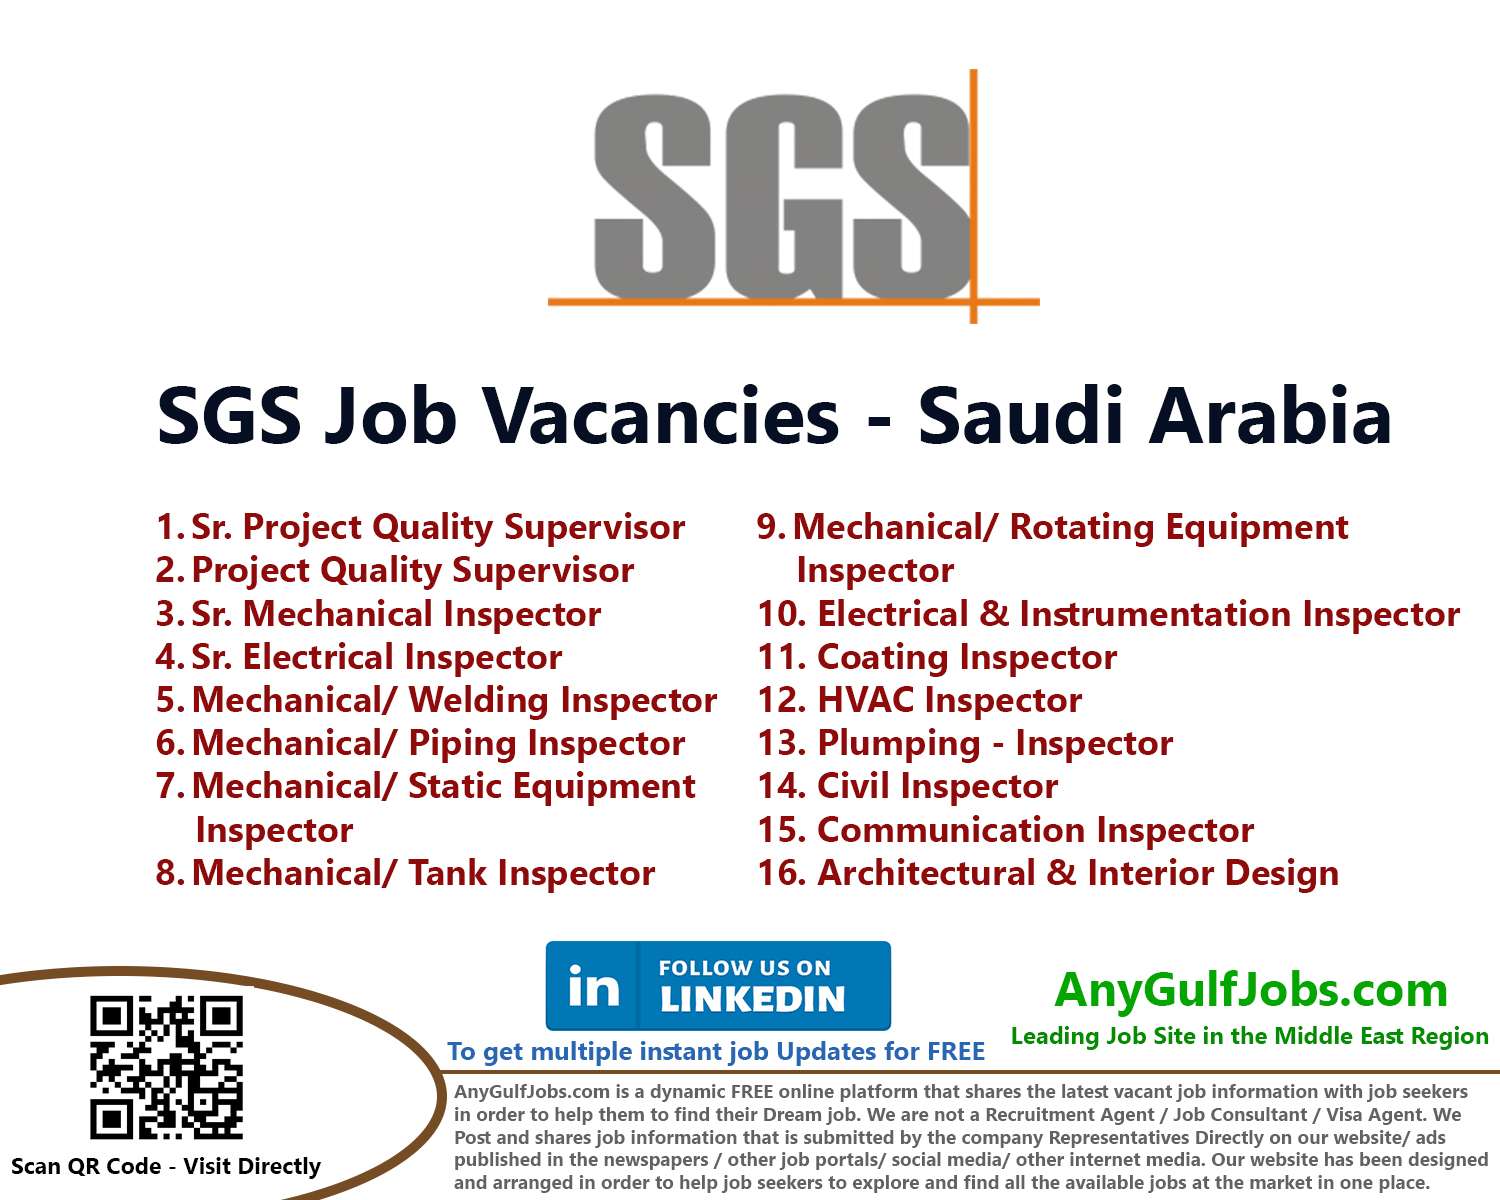 Multiple Job Vacancies  - SGS Job Vacancies - Saudi Arabia - KSA